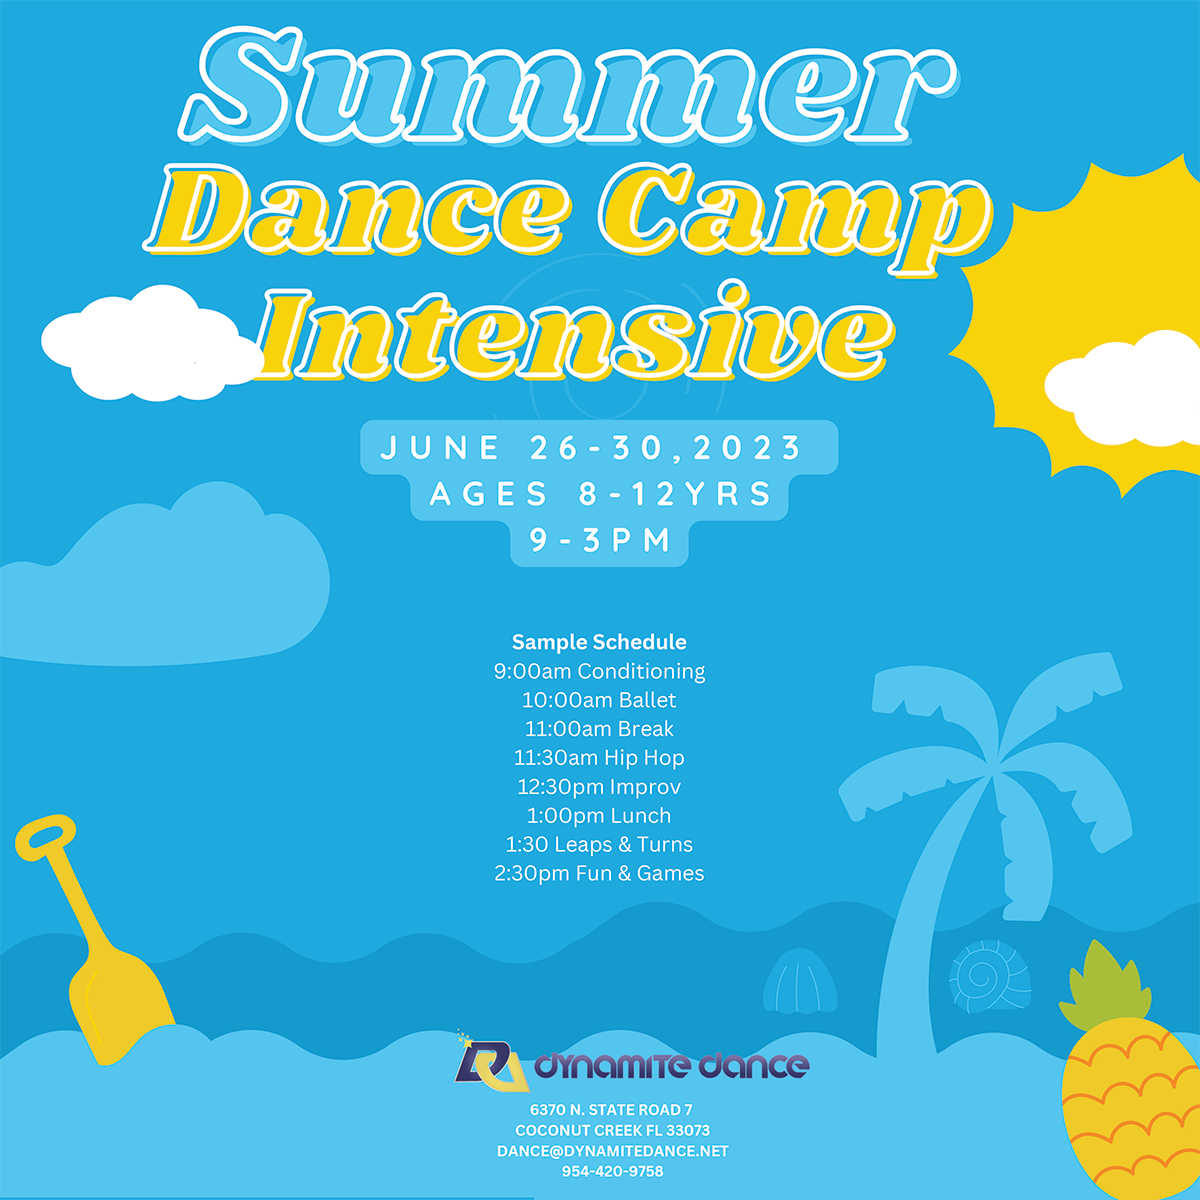 Summer Dance Camp Intensive June 26-30, 2023